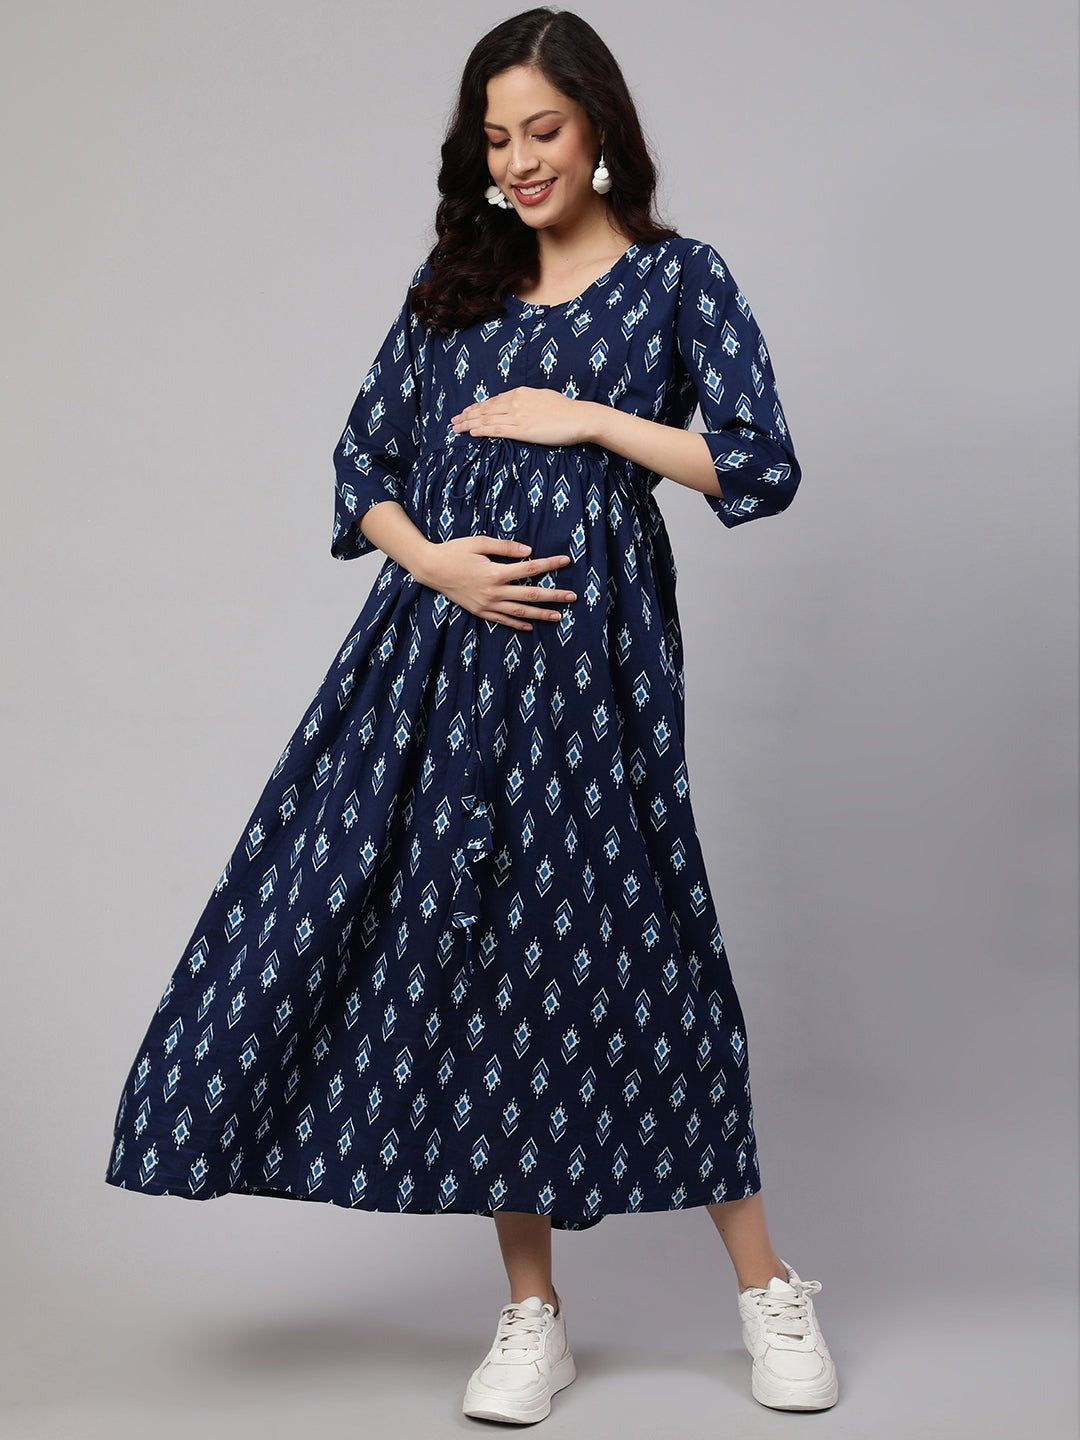 Navy Blue printed Cotton Maternity Dress